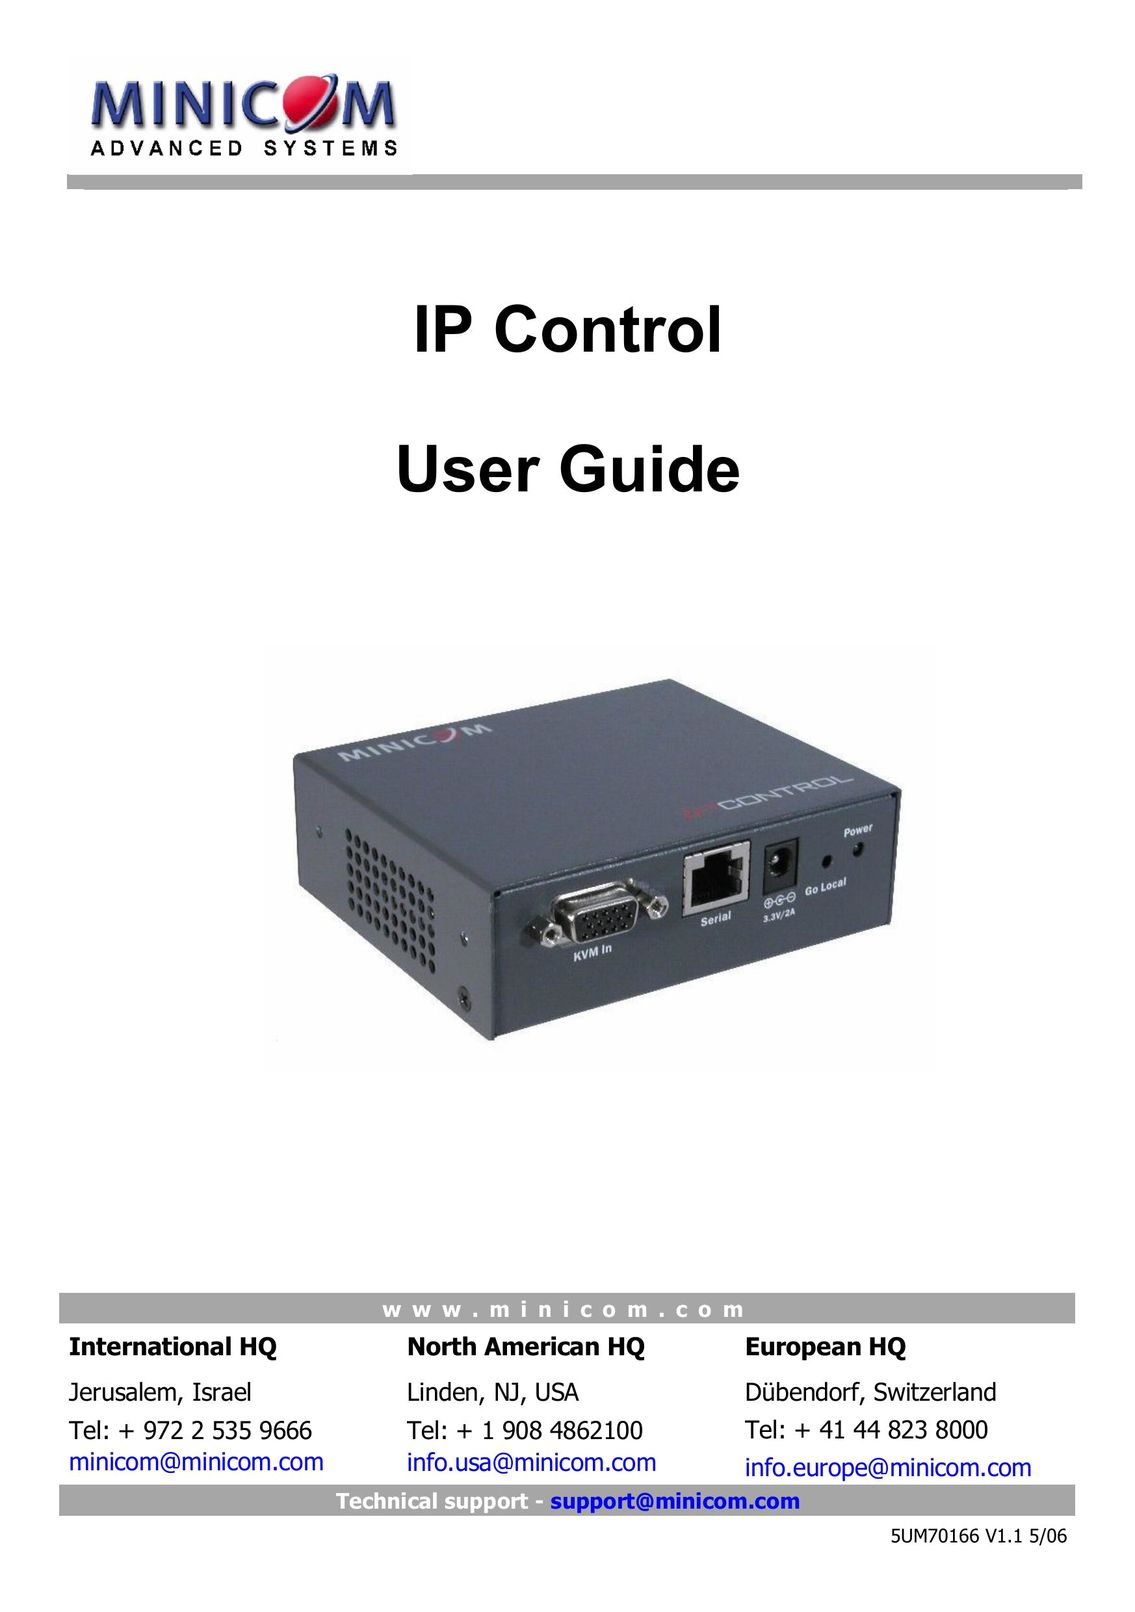 Minicom Advanced Systems 5UM70166 Switch User Manual